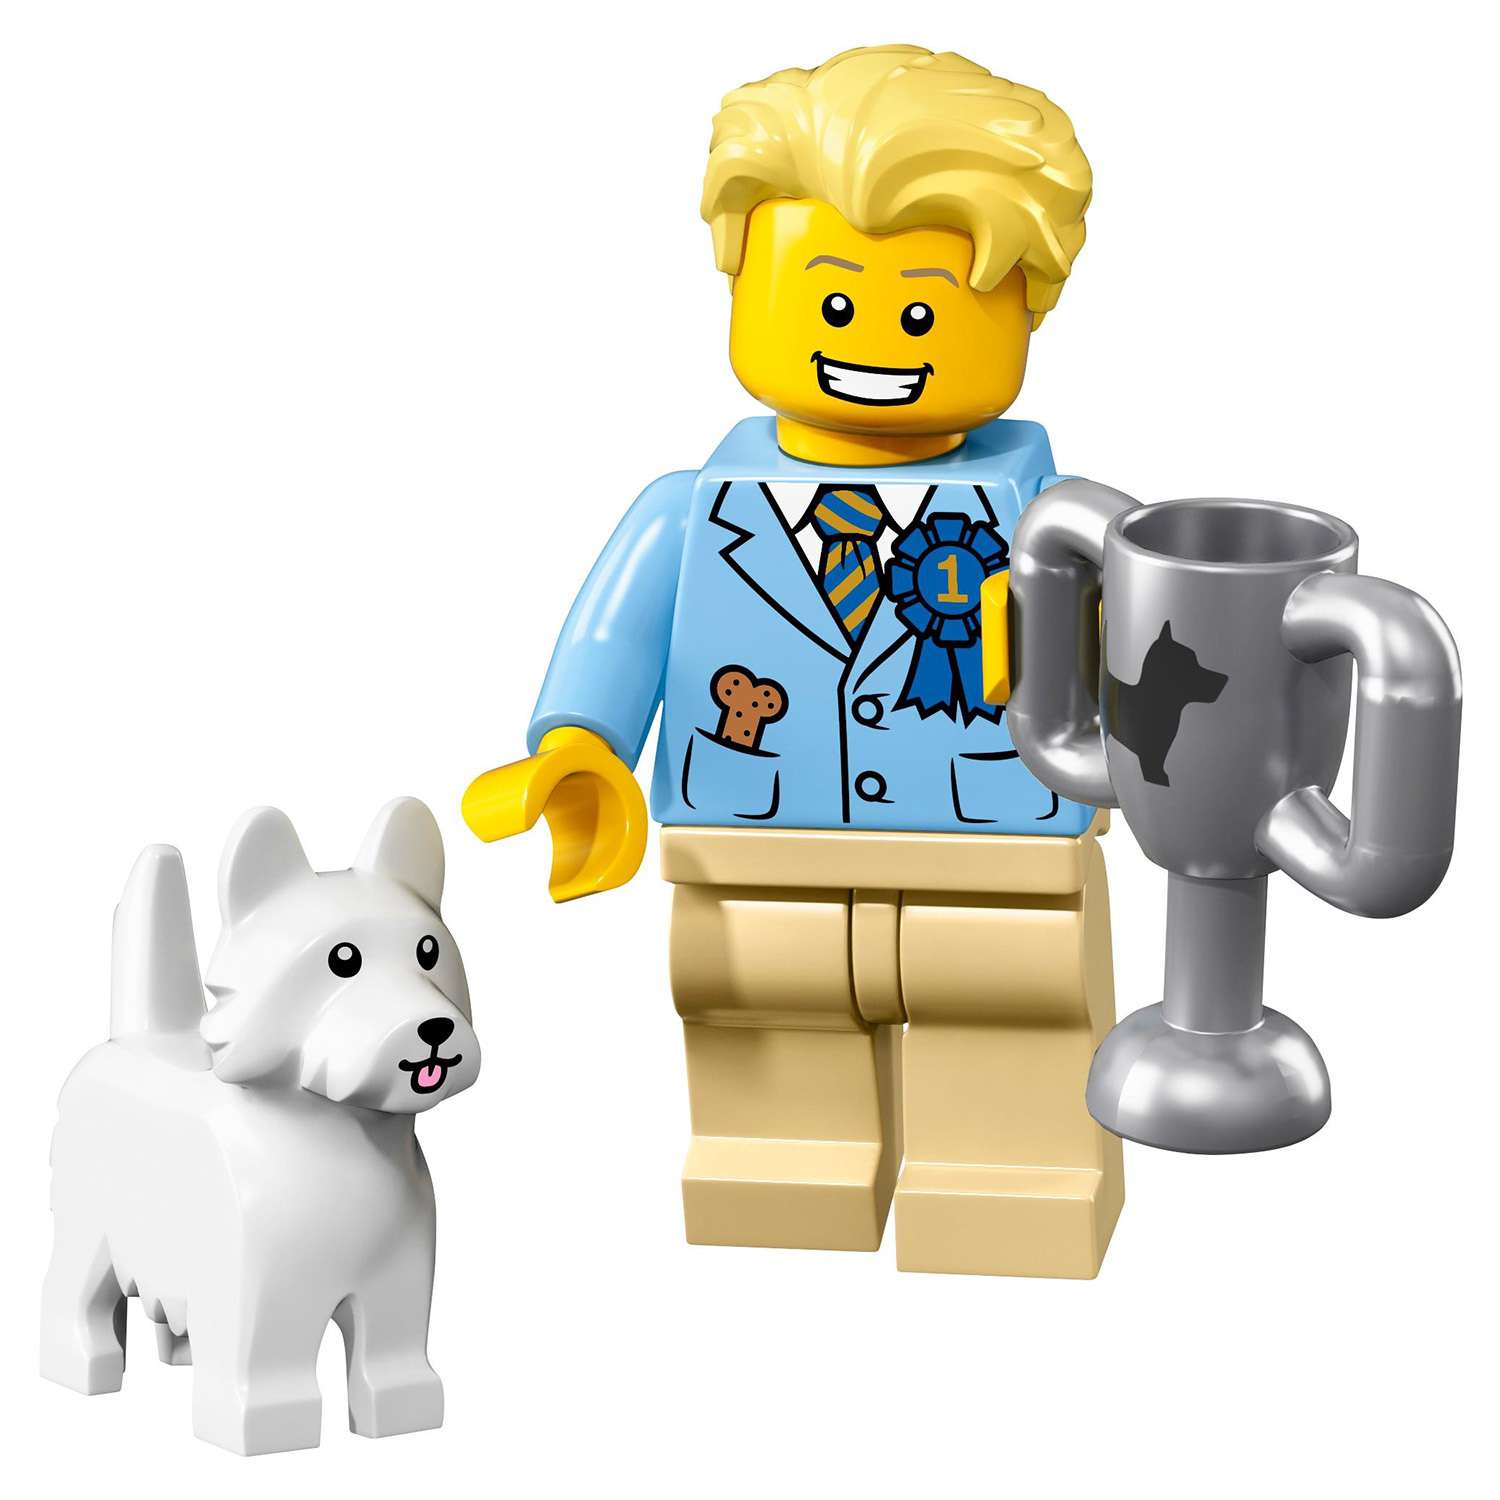 Конструктор LEGO Minifigures Confidential Minifigures Sept. 2016 (71013) - фото 18